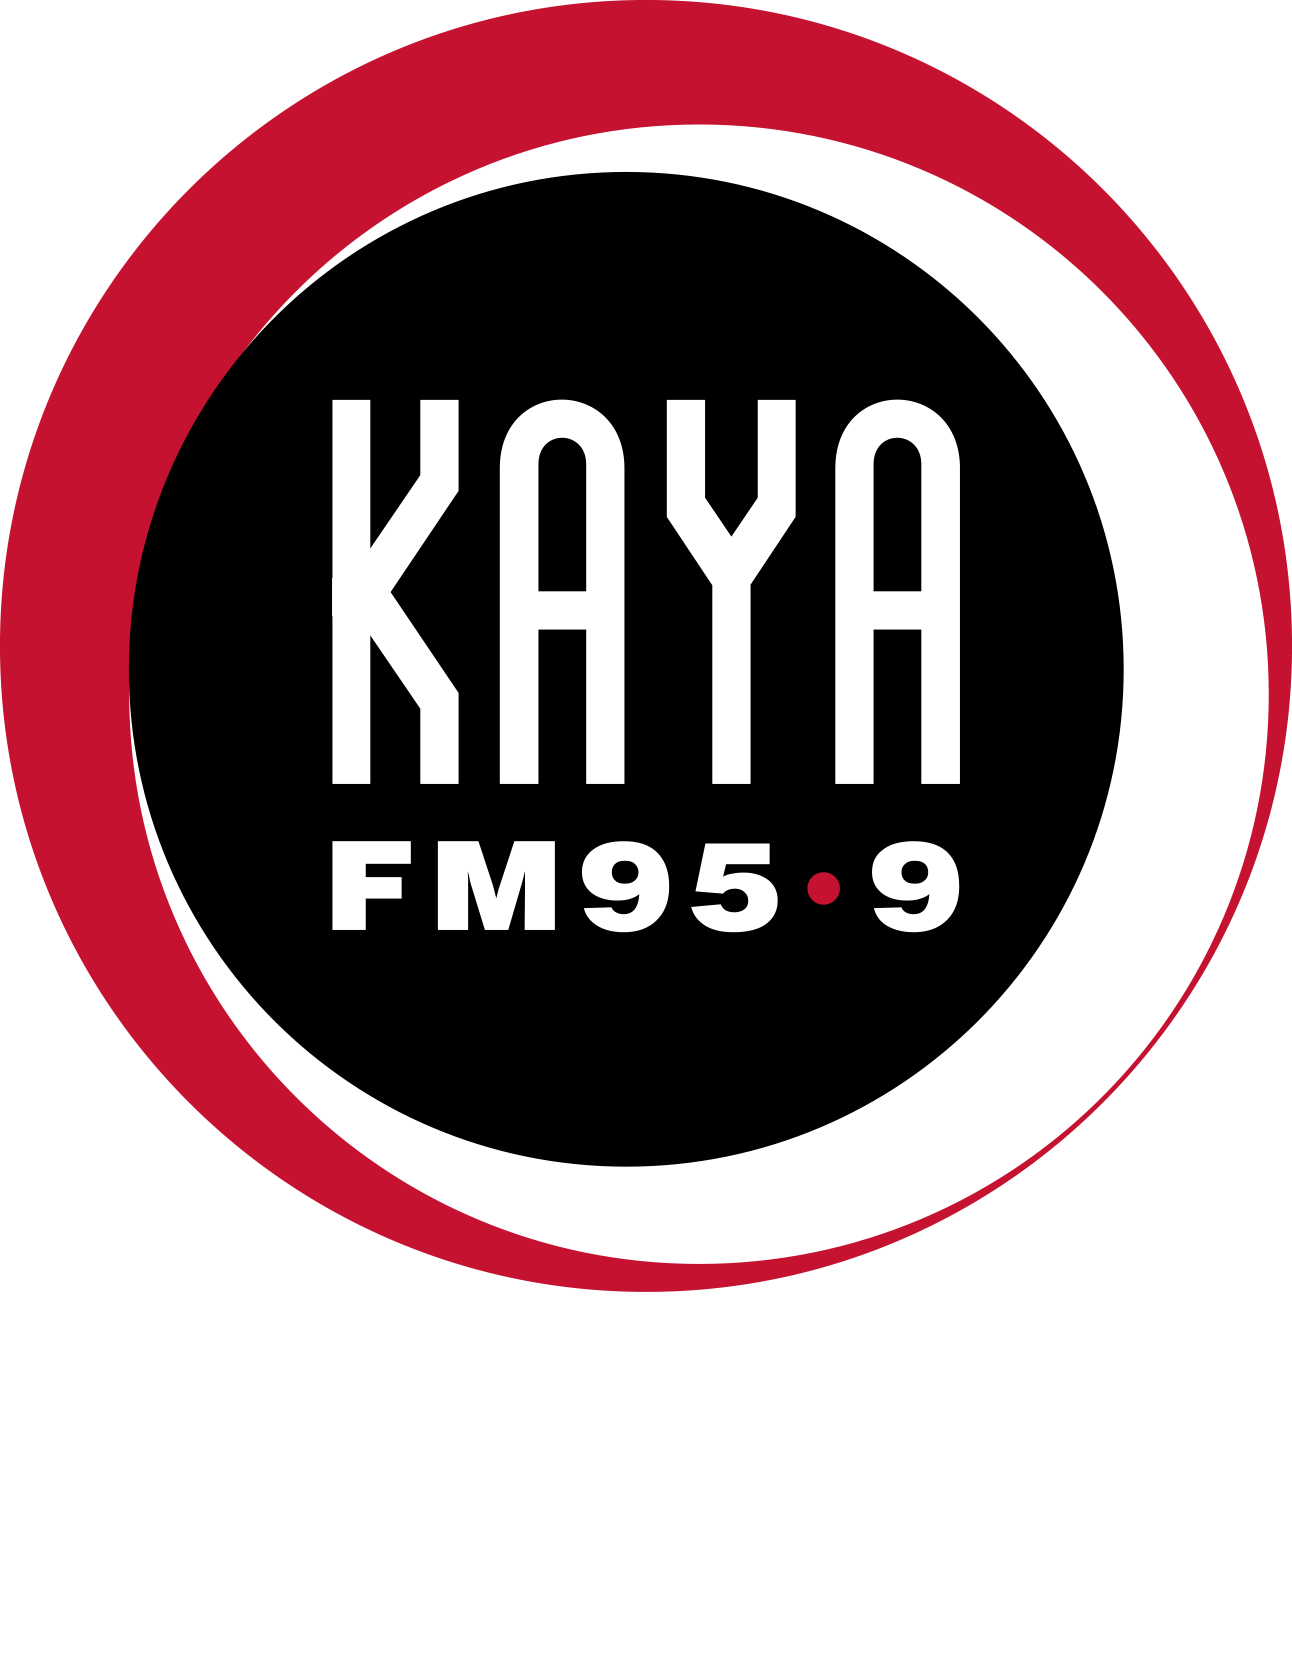 Kaya FM